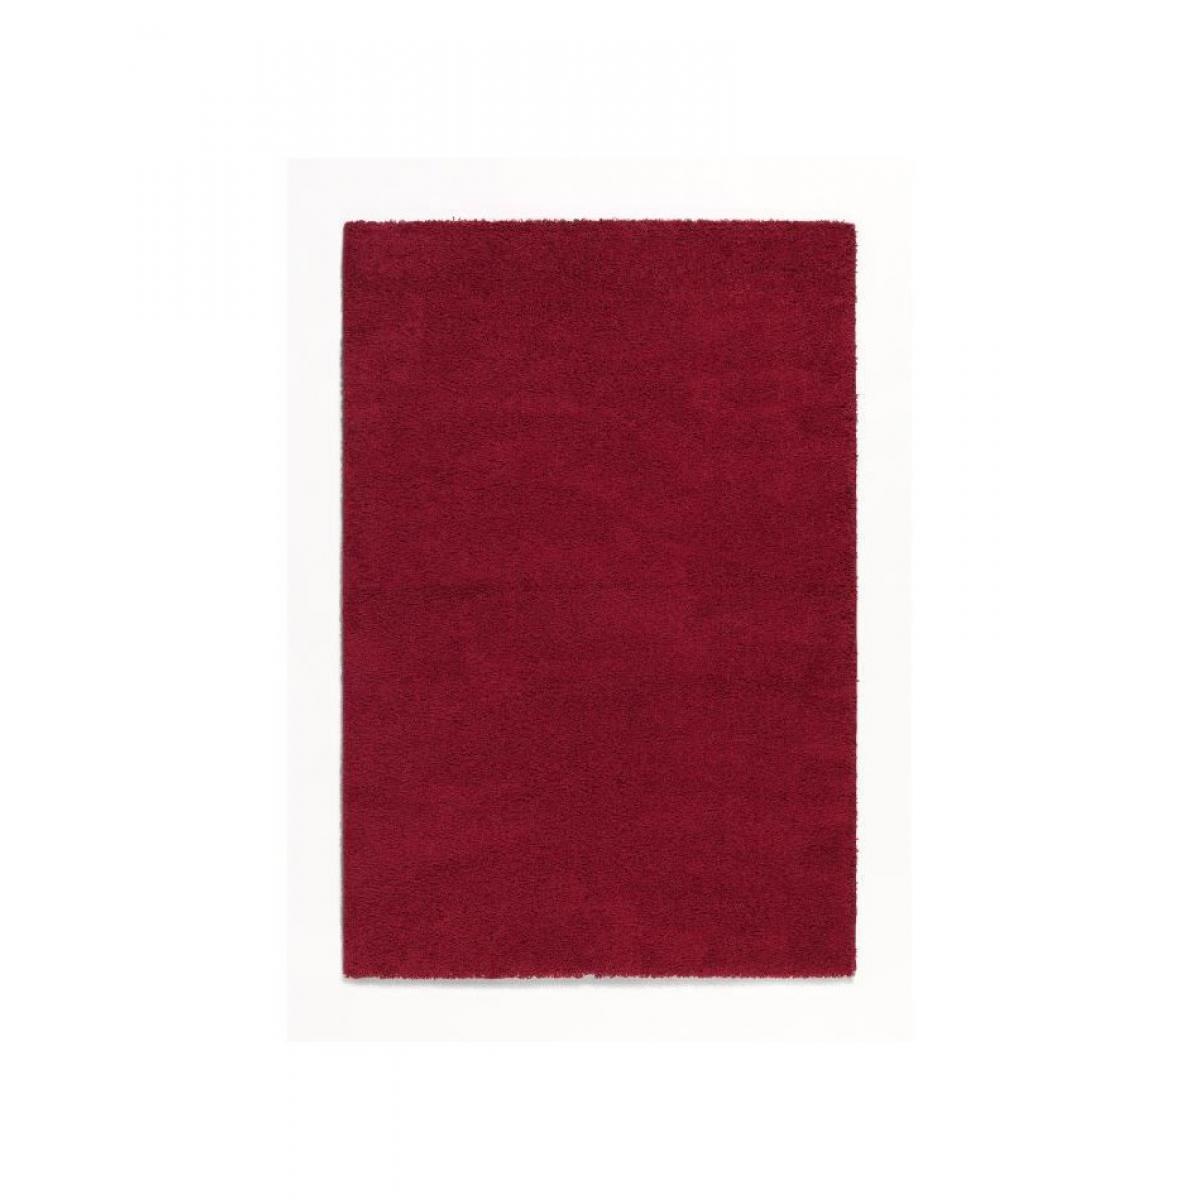 NAZAR - TRENDY Tapis de salon Shaggy en polypropylene - 120 x 160 cm - Rouge - Tapis